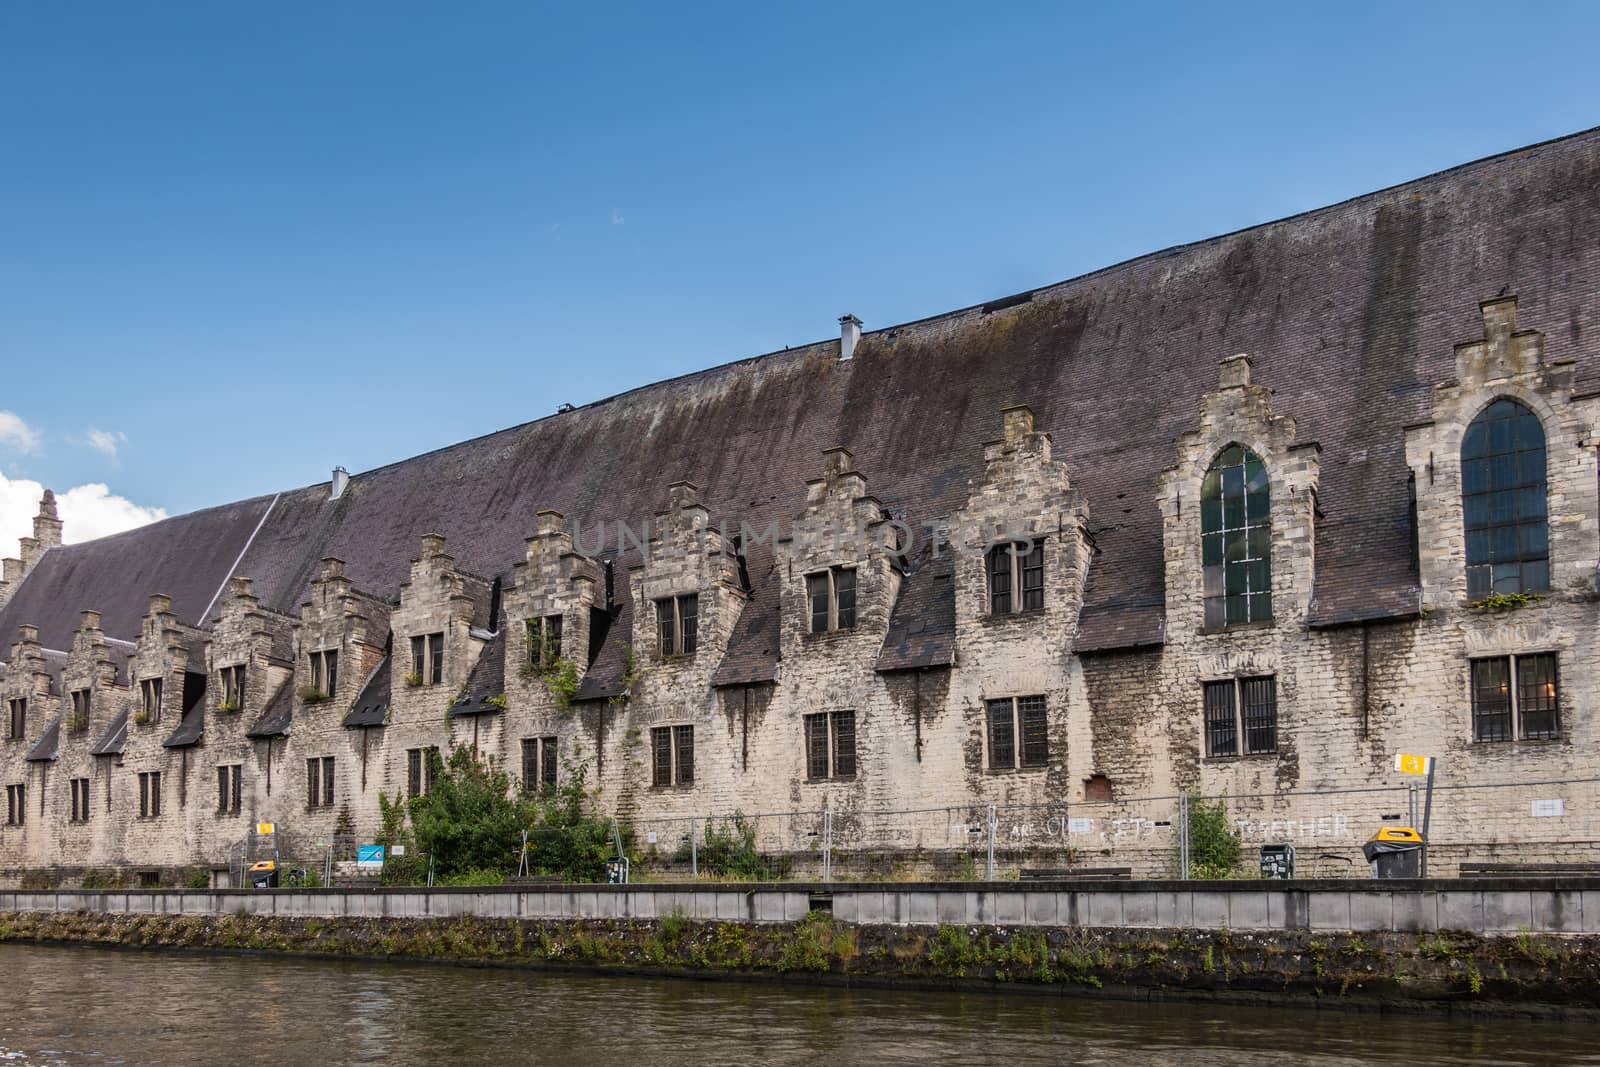 Gent, Flanders, Belgium -  June 21, 2019: Closeup of historic gray-stone long facade of Vleeshuis, medieval meat trading floor, along Leie River under blue sky.